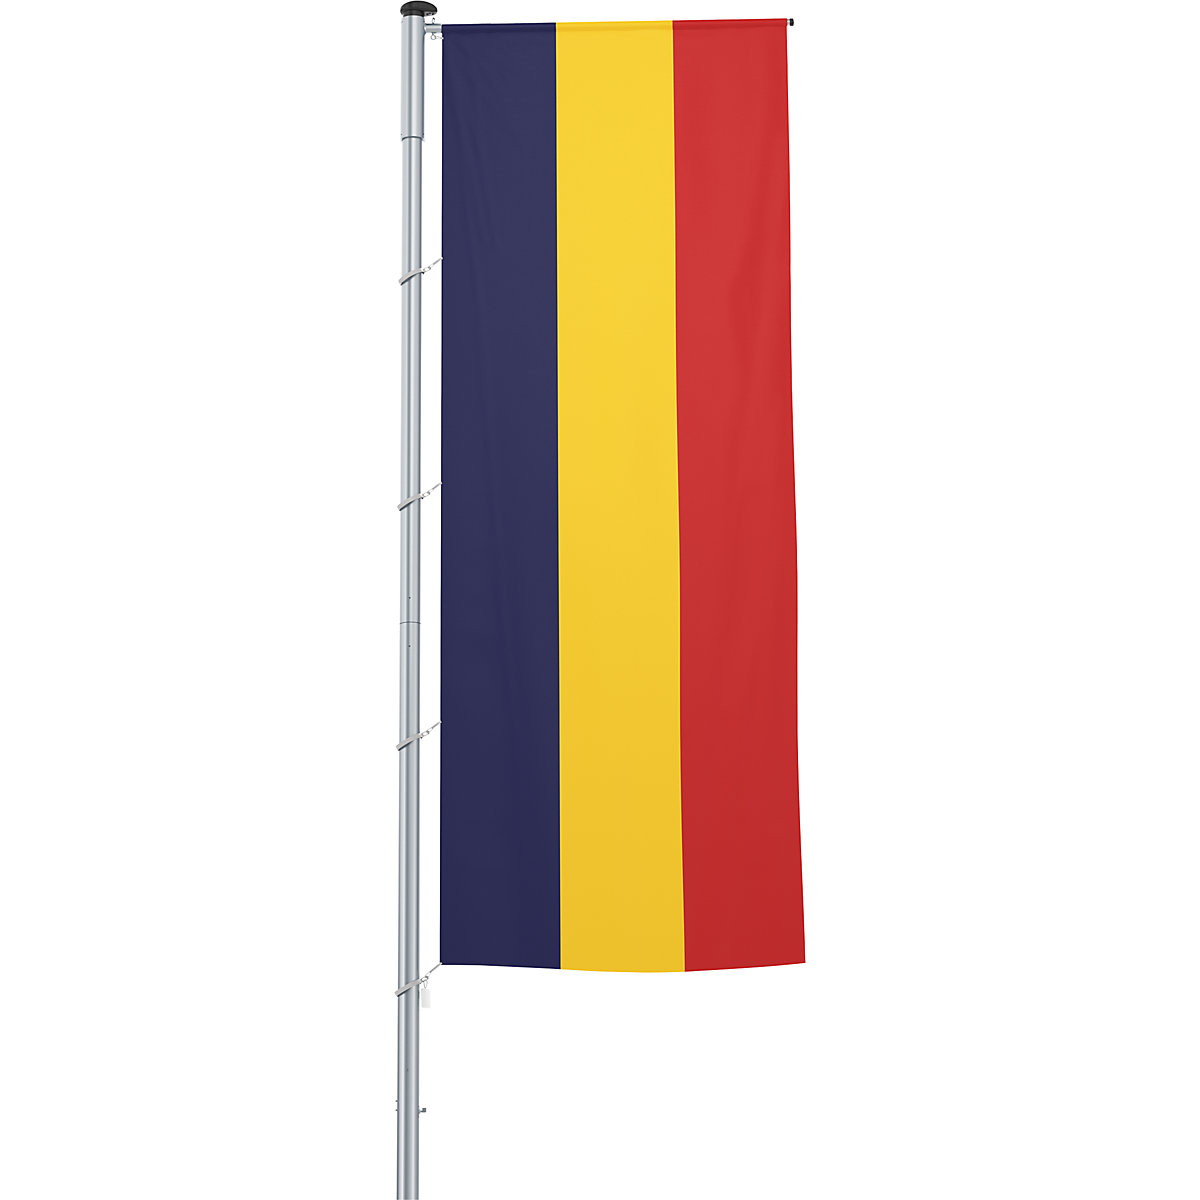 Steag pentru braț/drapel național – Mannus, format 1,2 x 3 m, România-4